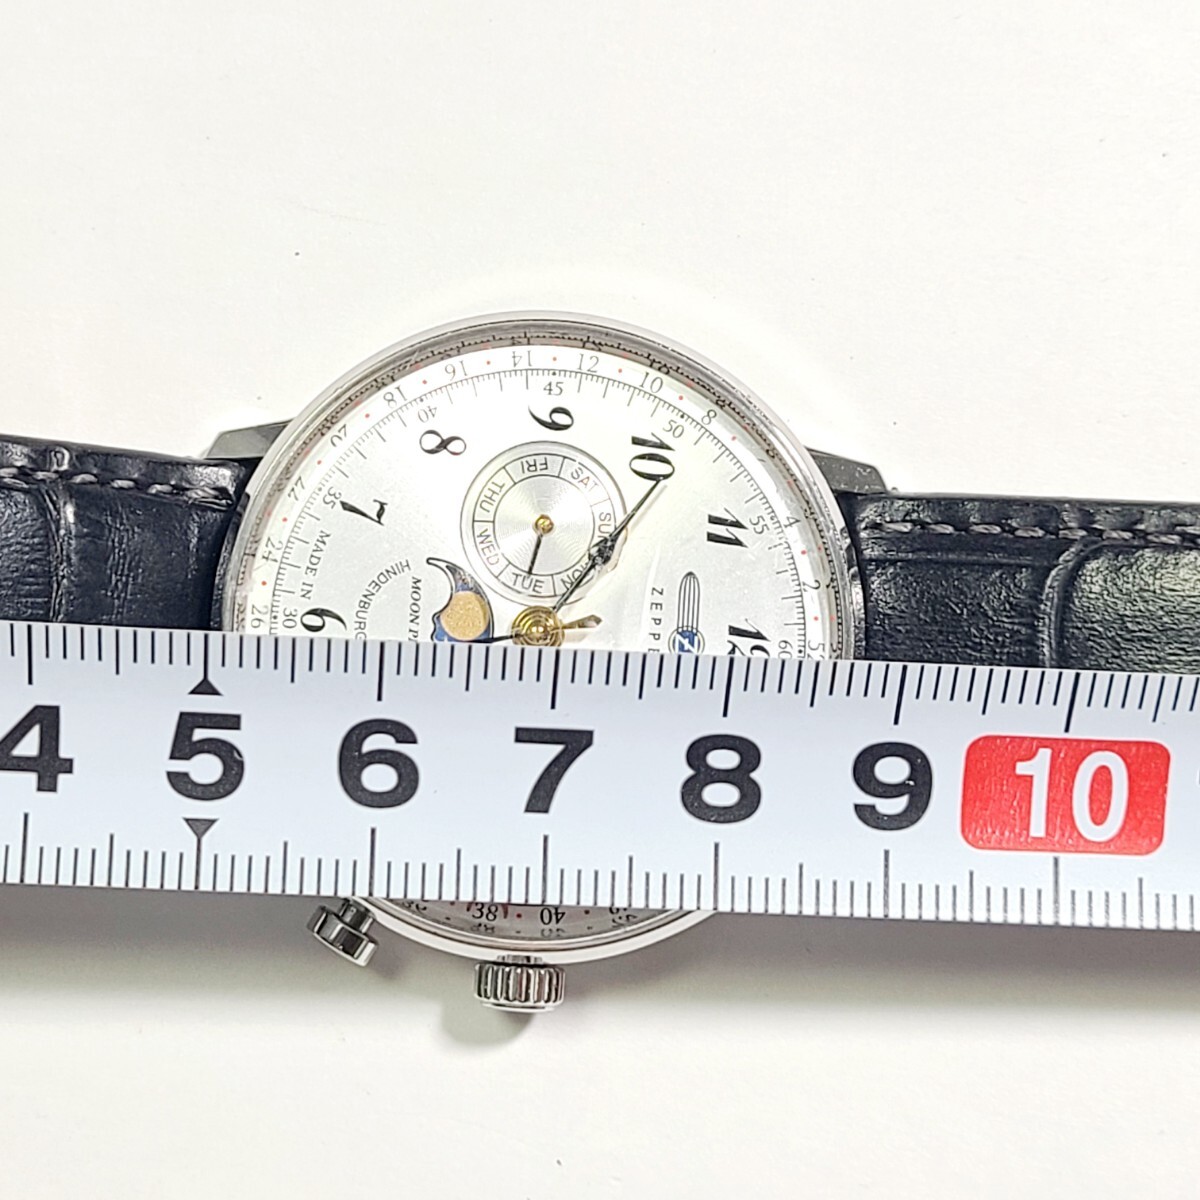 CM10LL ドイツ製 ZEPPELIN ツェッペリン 腕時計 LZ129 HINDENBURG moonphase クォーツ シルバー カーフレザー 革ベルト 日常生活防水_画像5